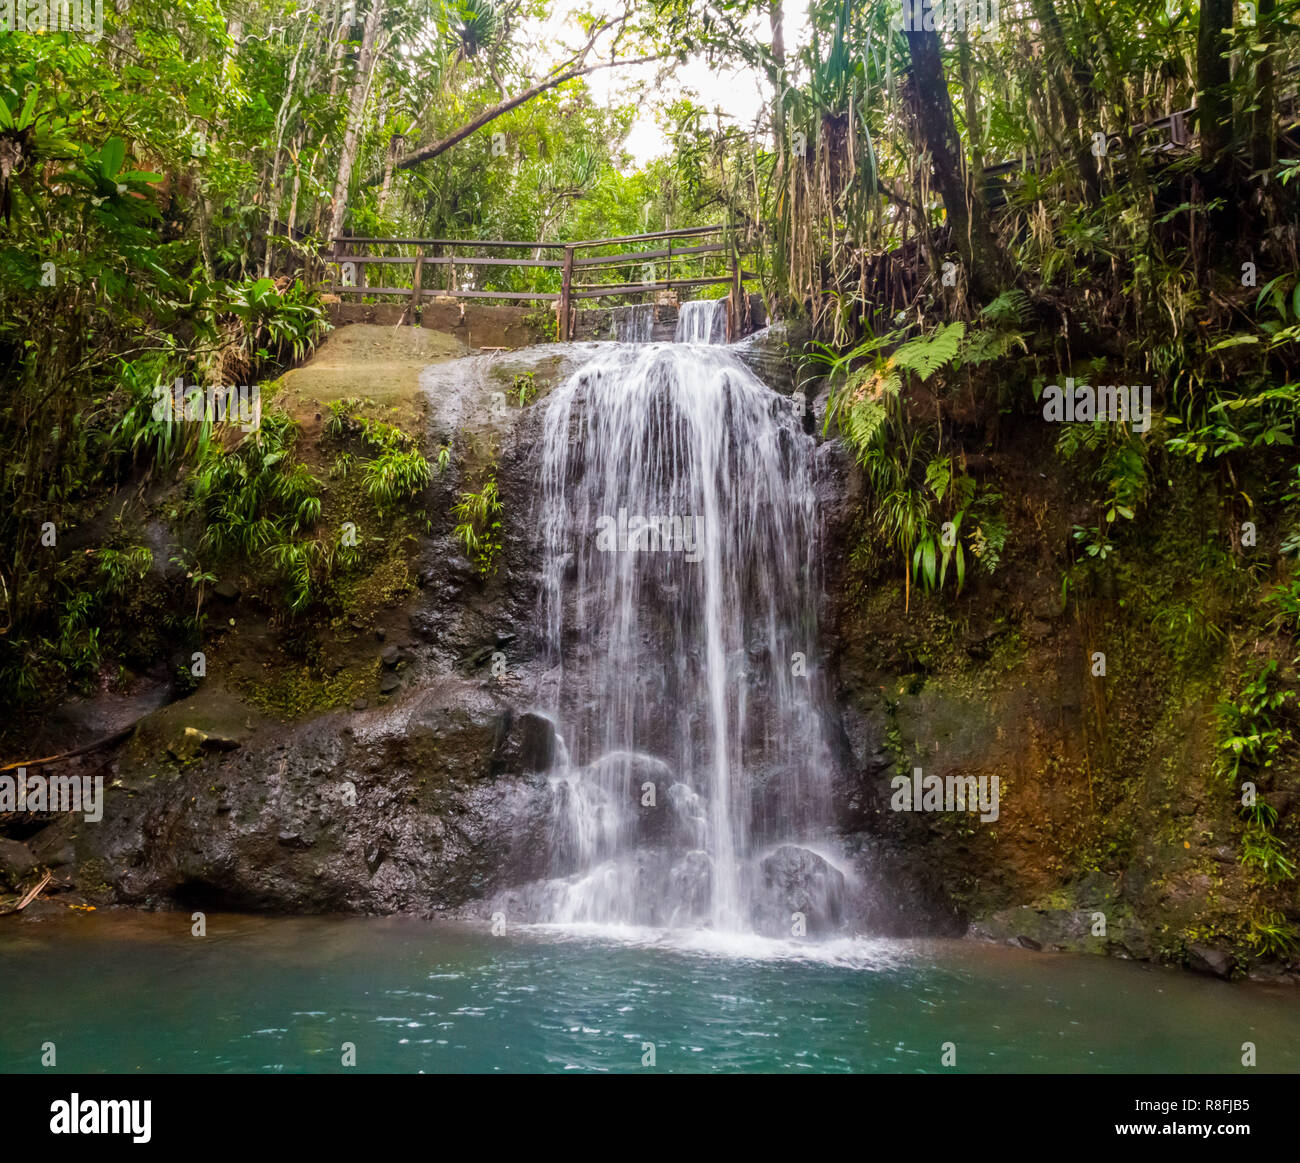 brochure band eksistens A hiking trail near a waterfall in Colo-i-Suva rain forest national park,  nature reserve near Suva, Viti Levu island, Fiji, Melanesia, Oceania Stock  Photo - Alamy